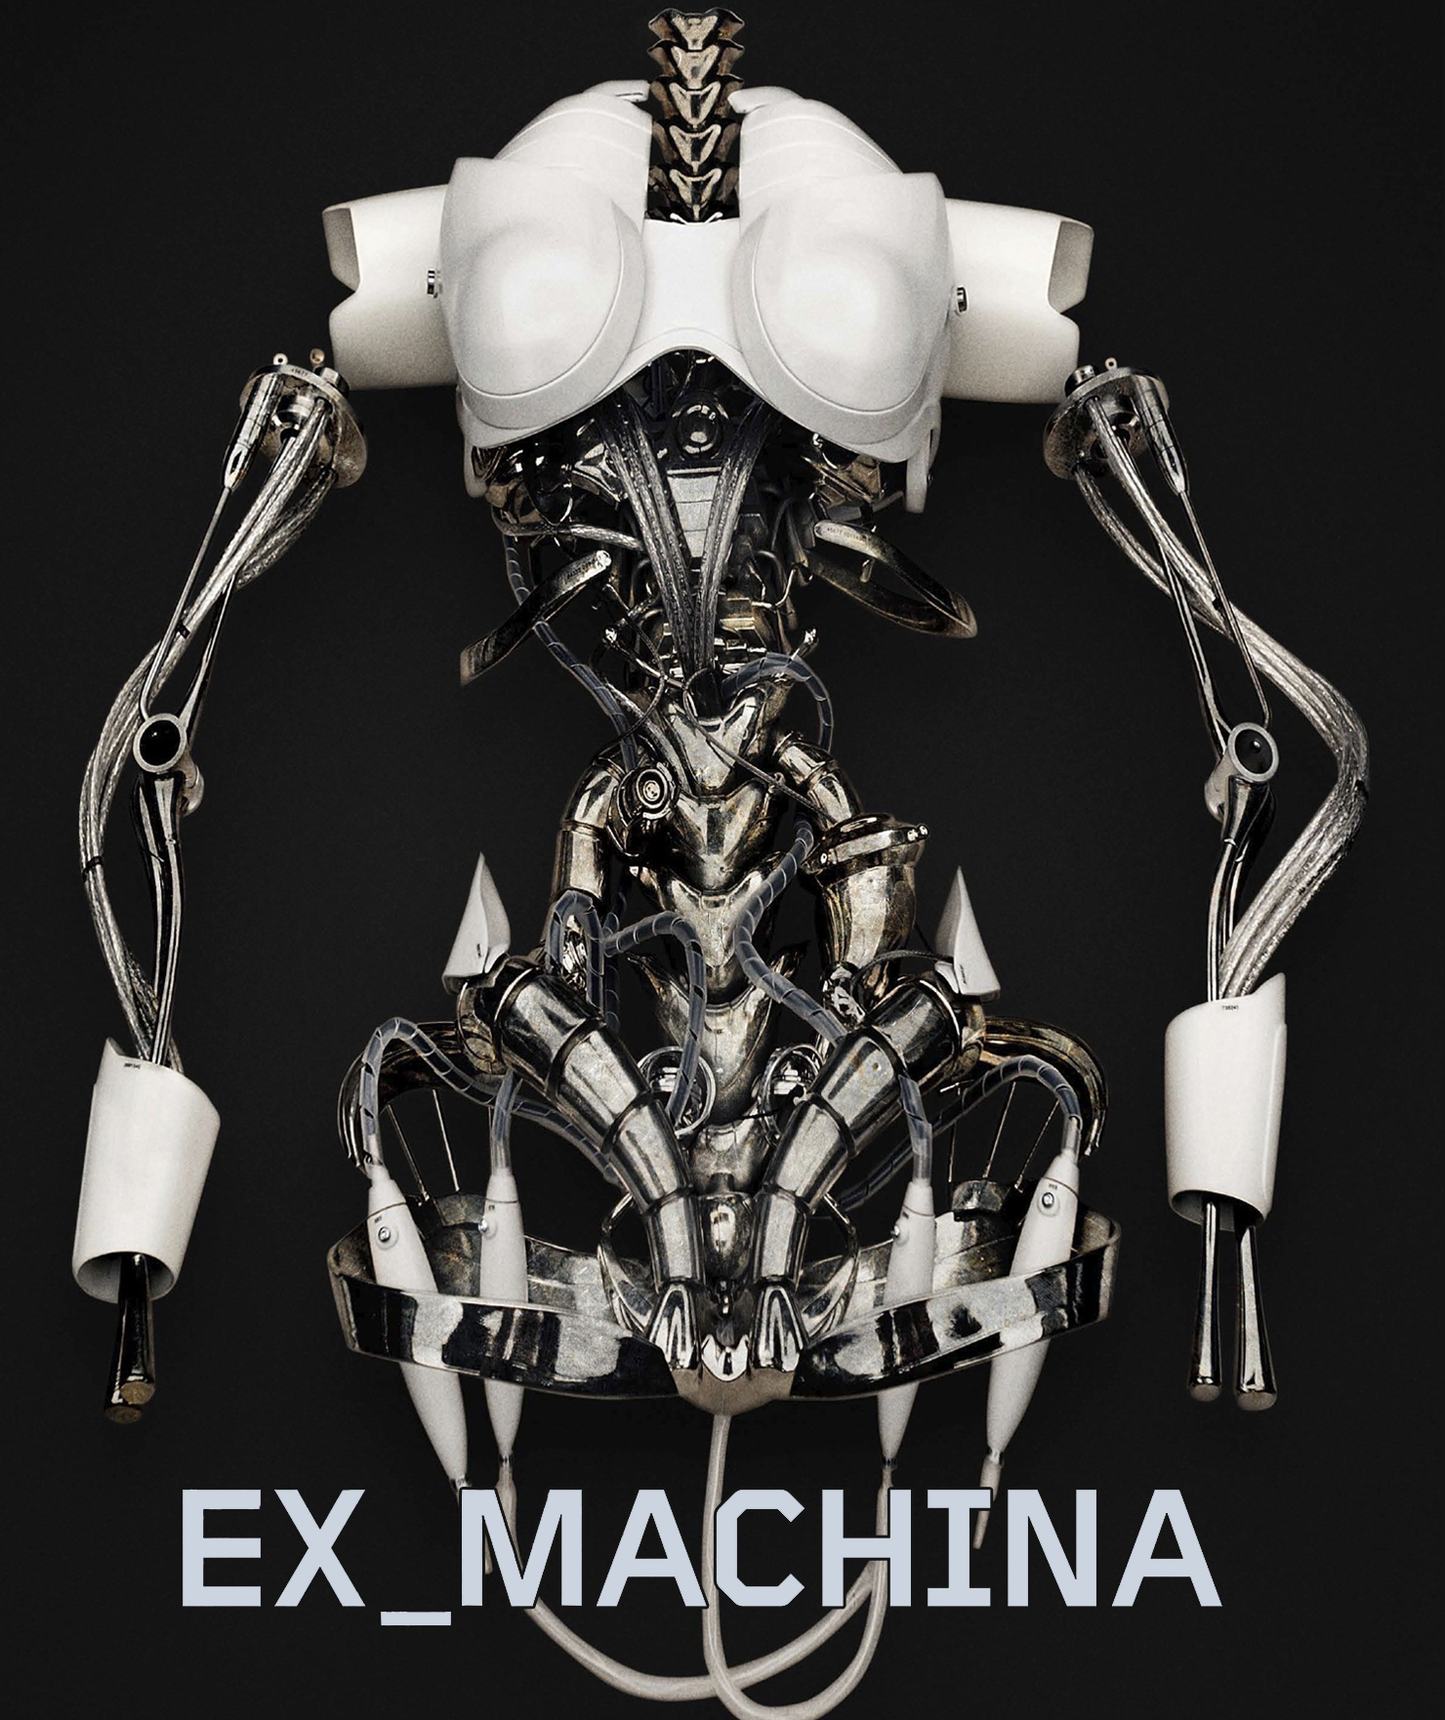 Ex Machina - Blu-ray SciFi 2015 R